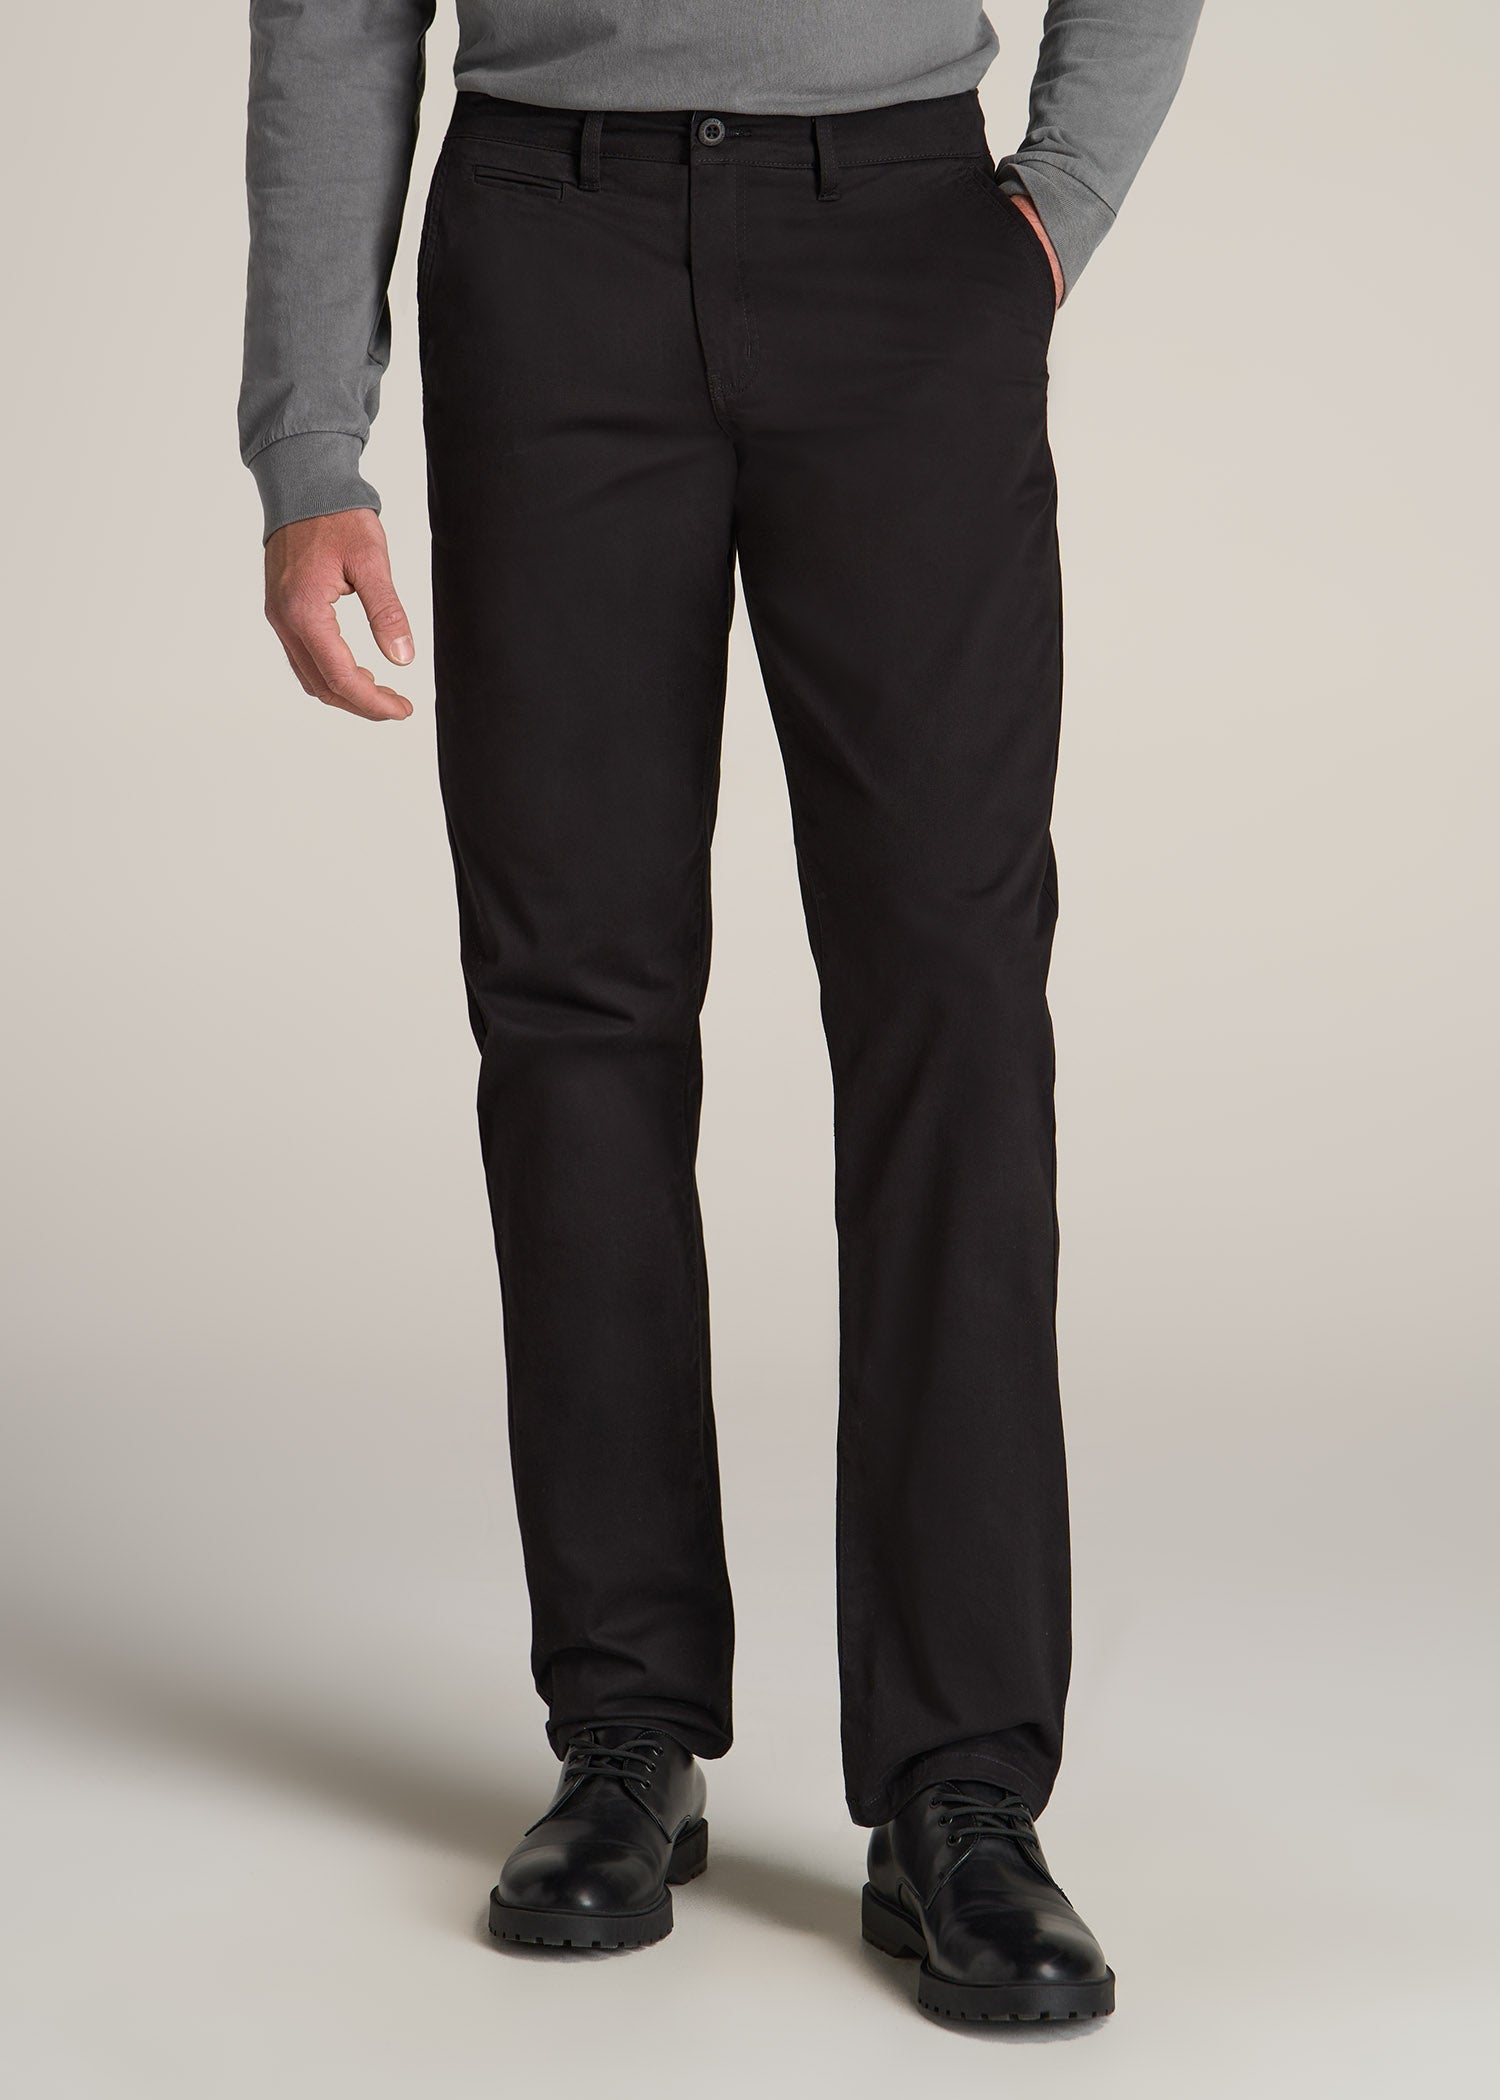 J1 STRAIGHT Leg Chinos in Black - Pants for Tall Men